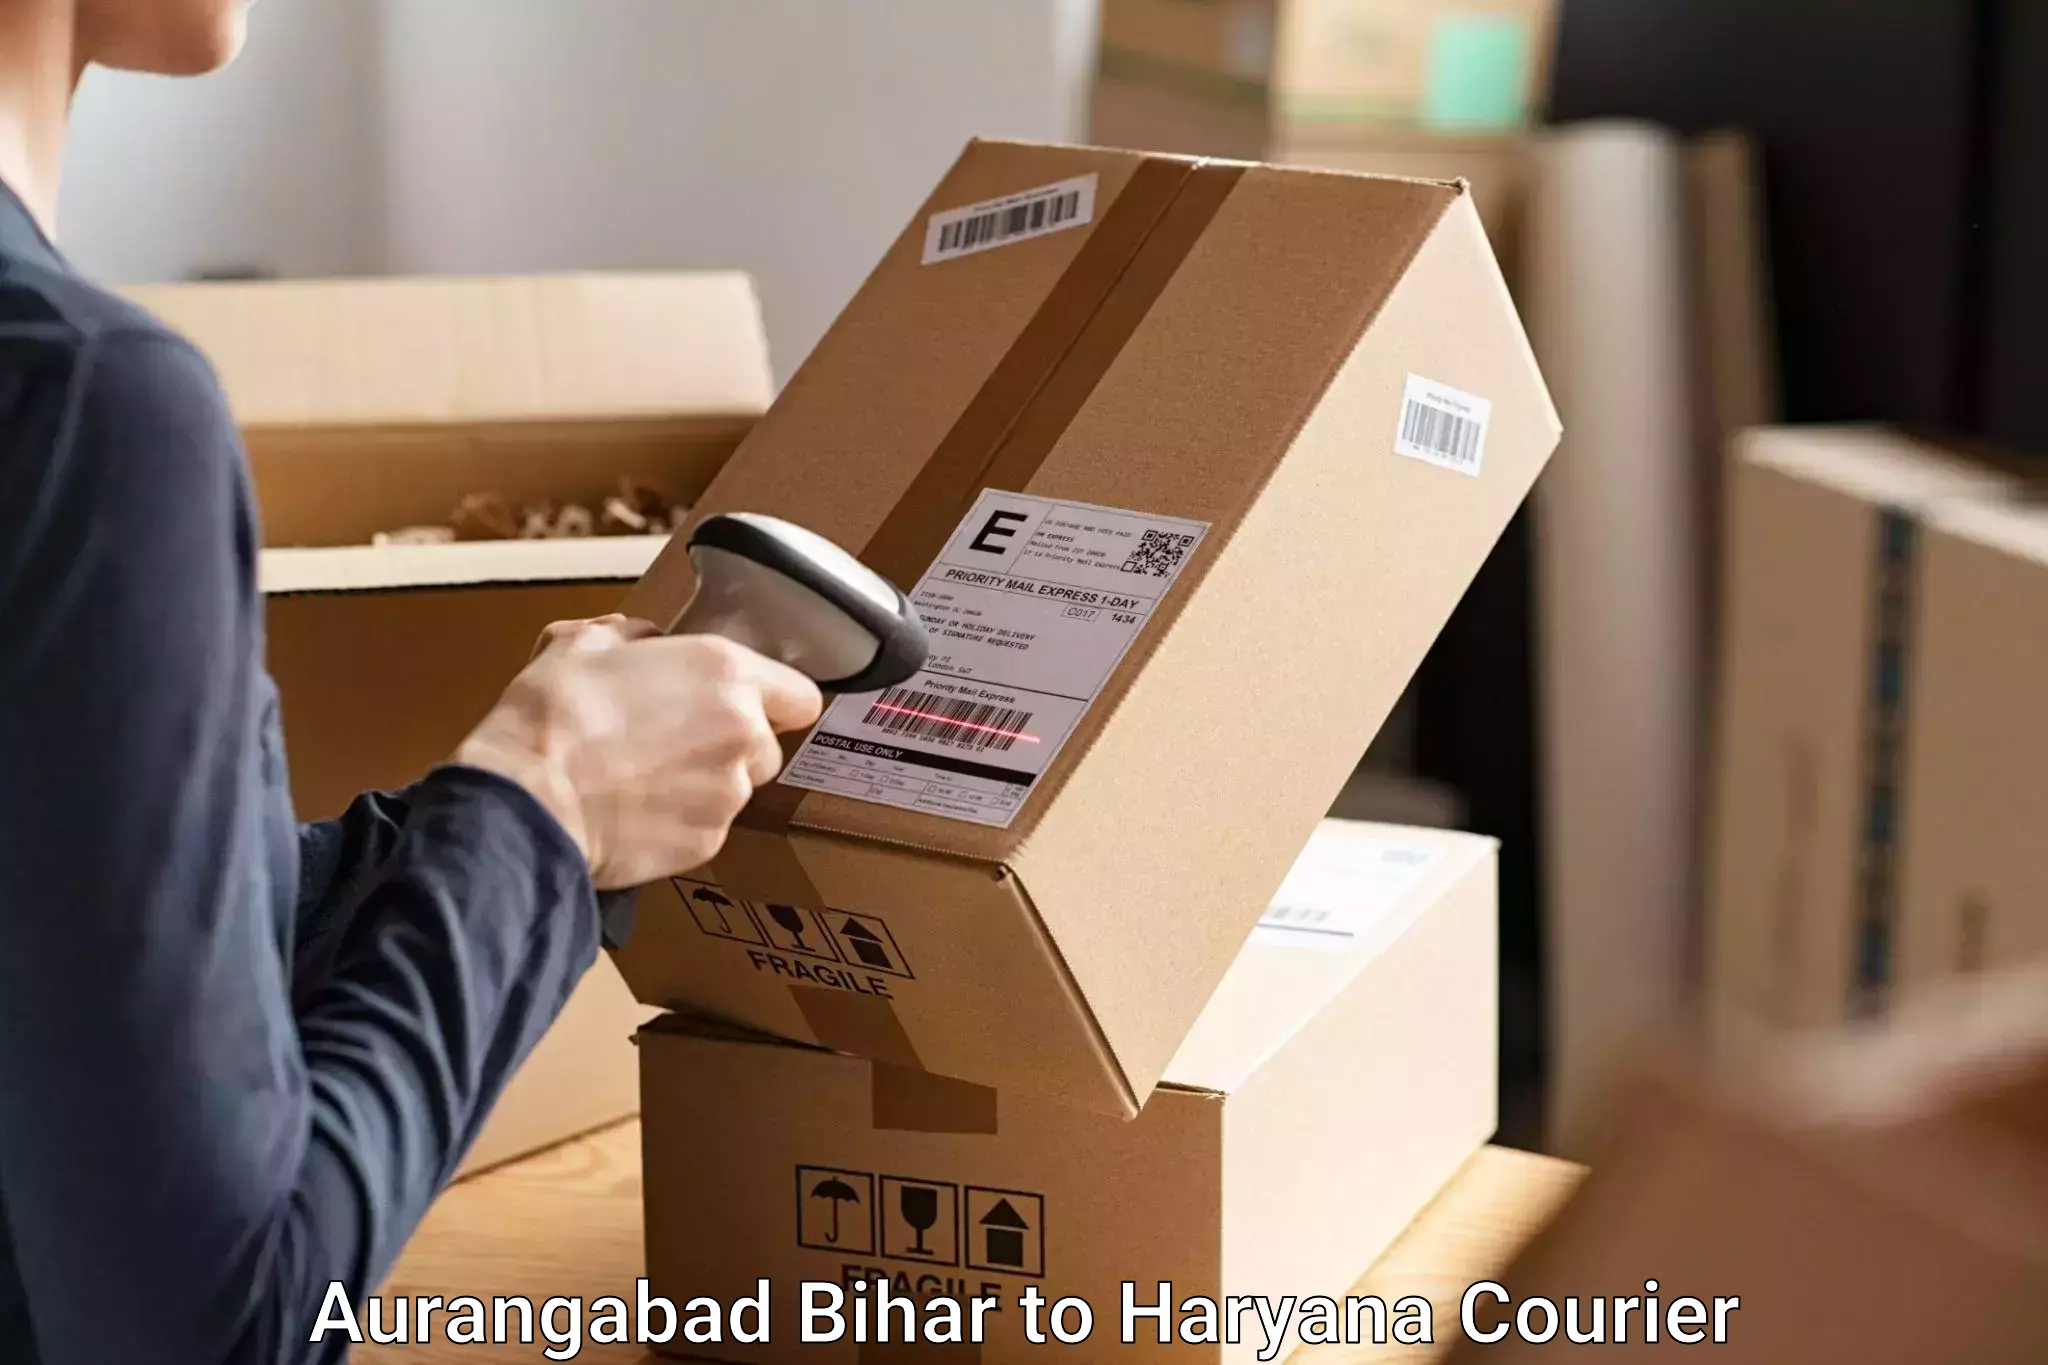 Baggage transport professionals Aurangabad Bihar to Loharu